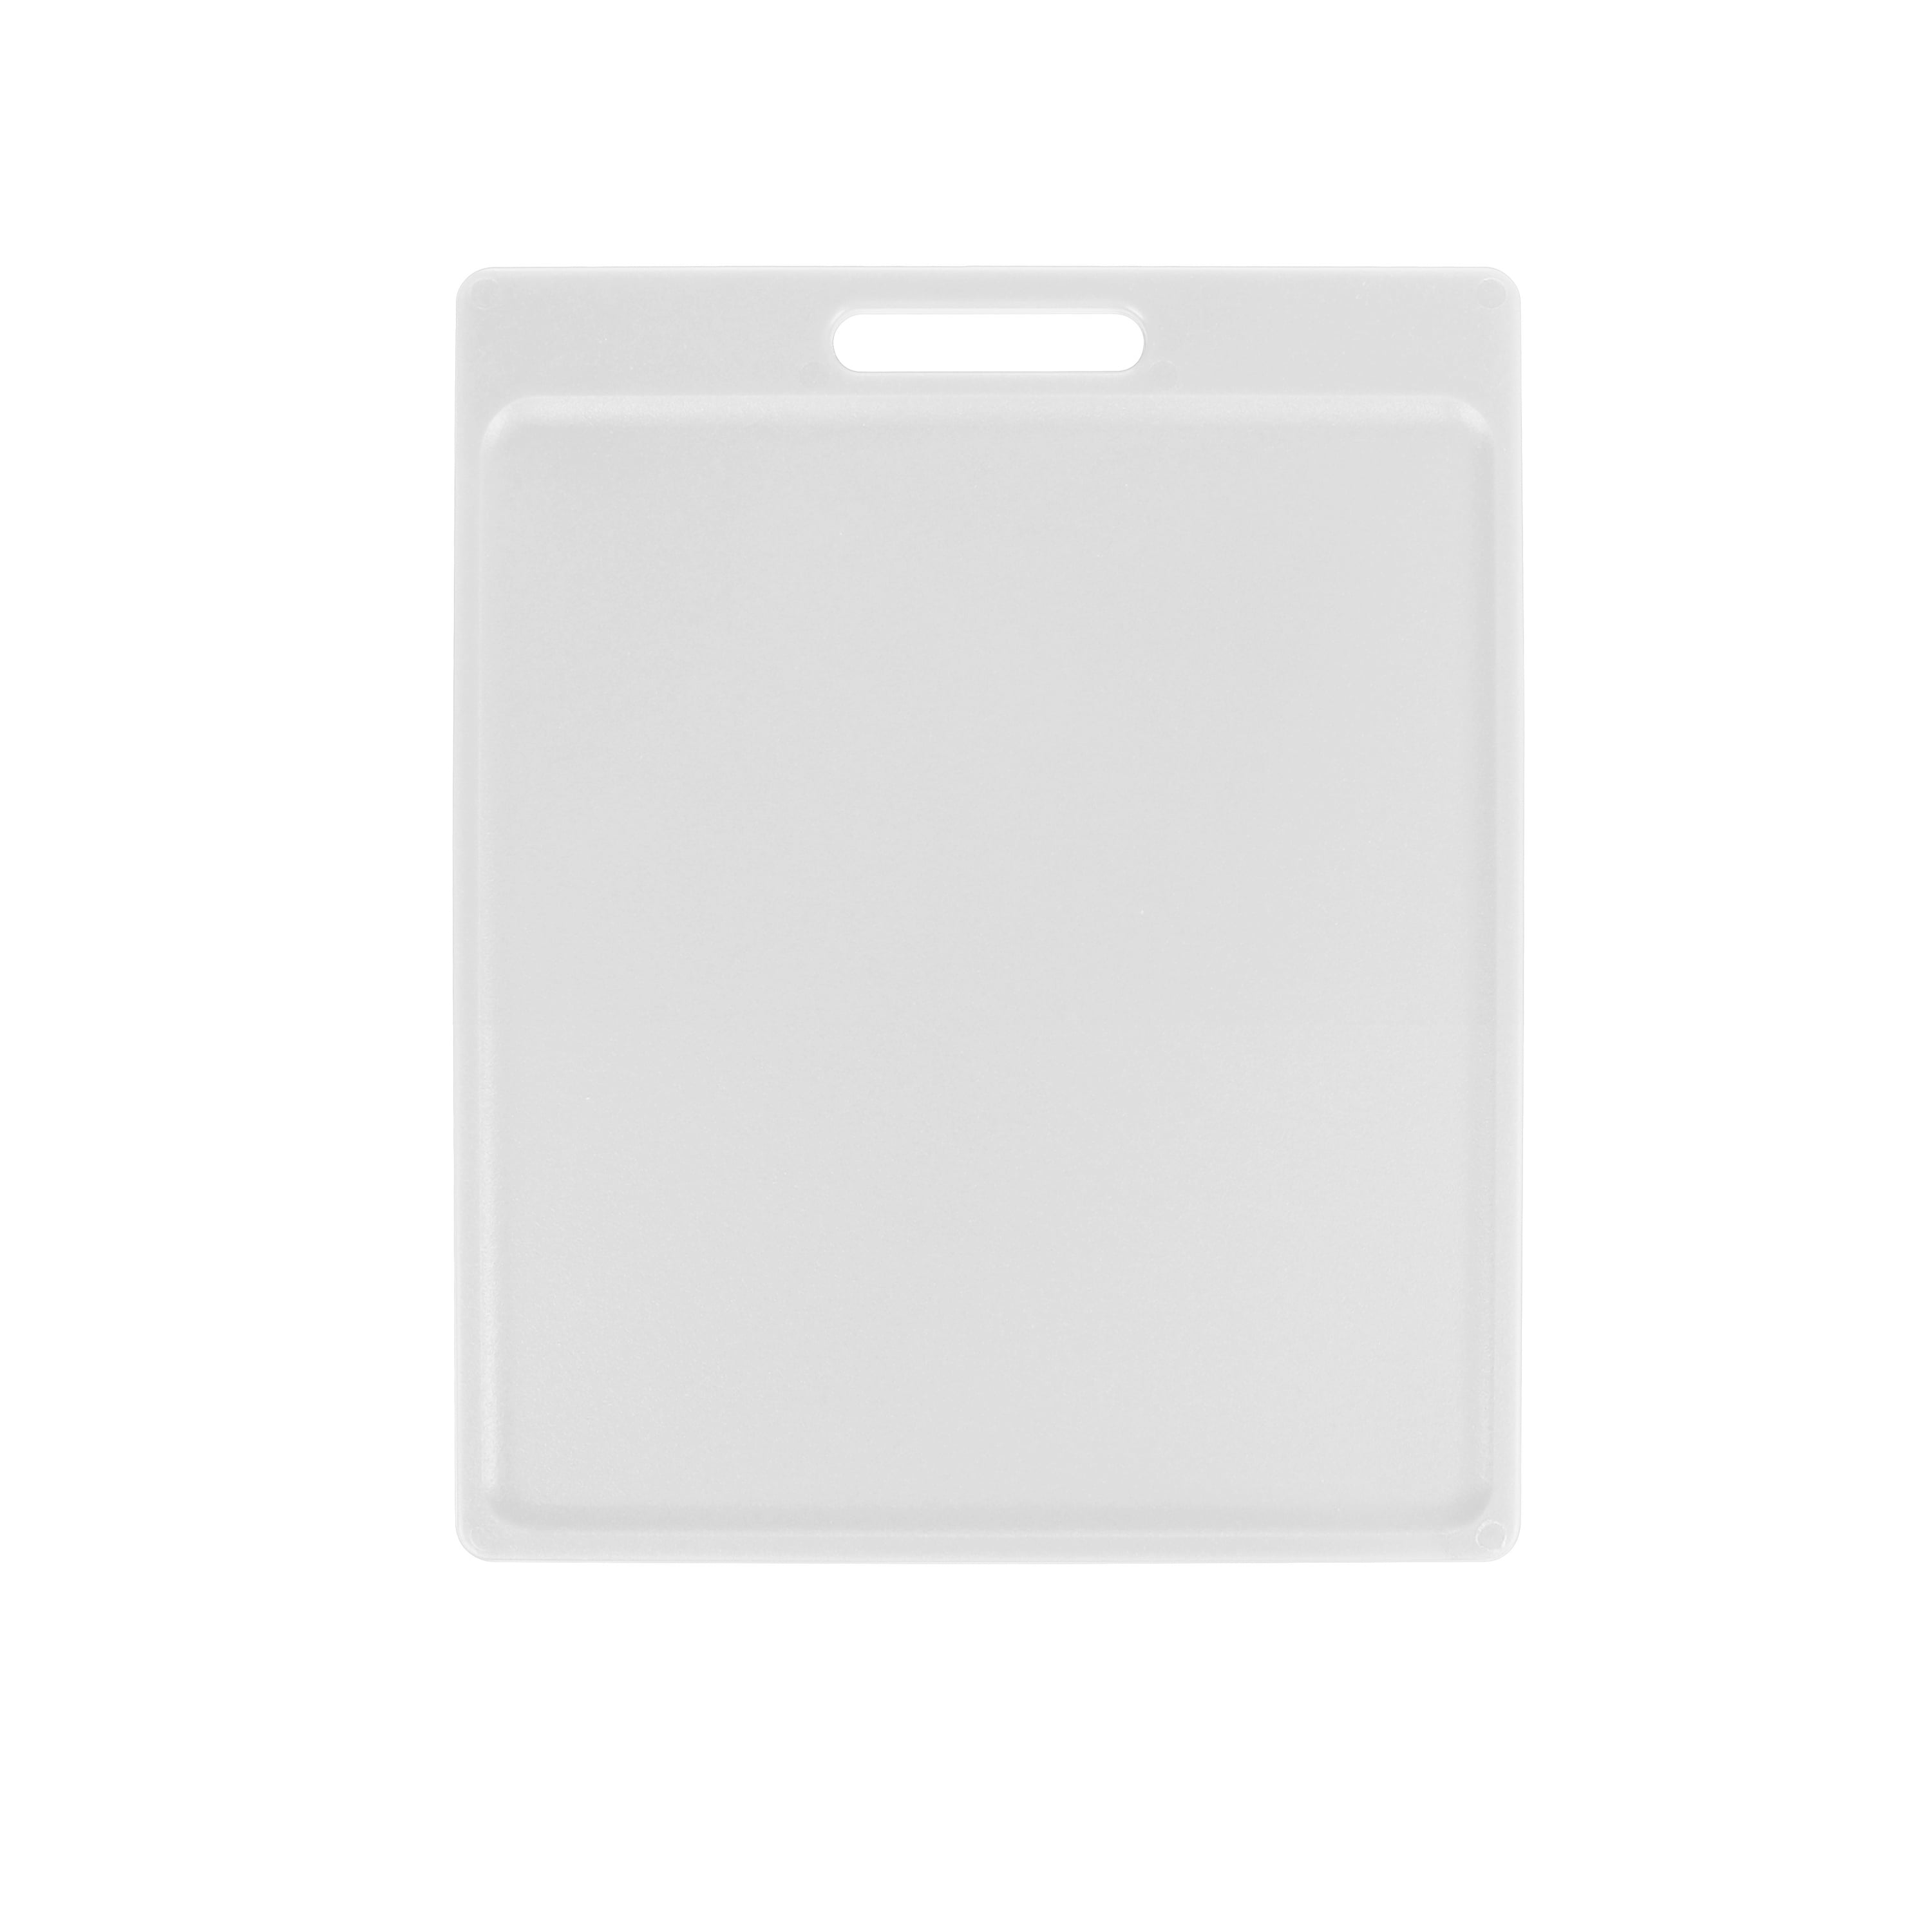 mainstays cutting board, Bpa free, white 8.5 x 11, new